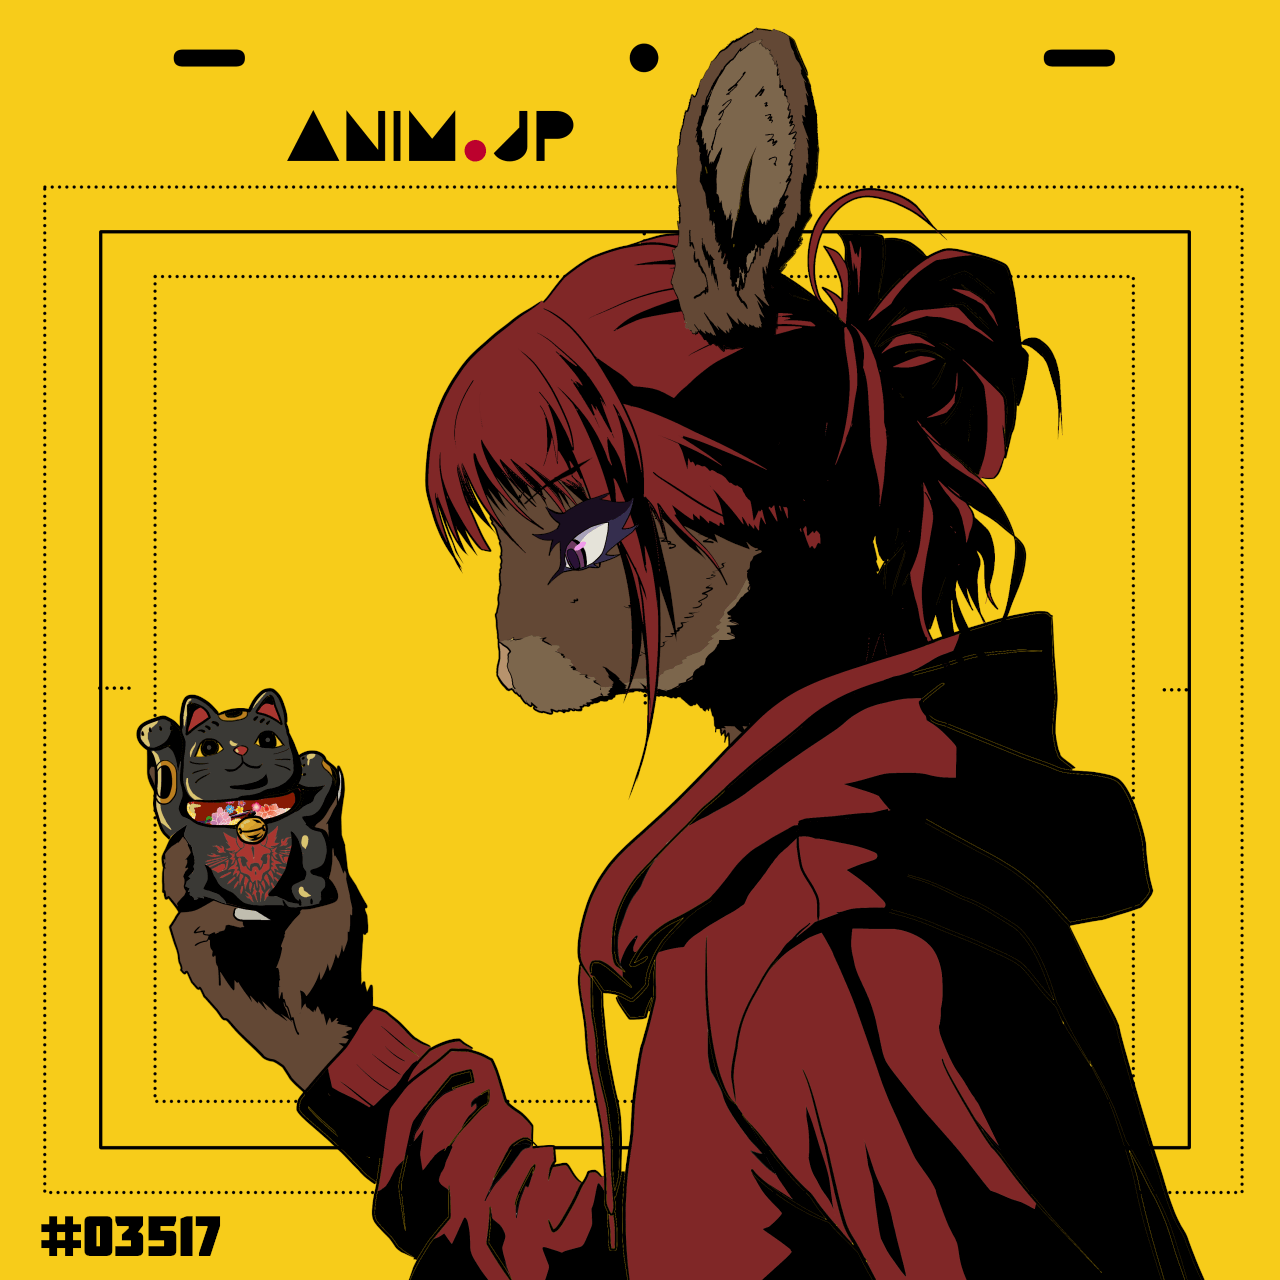 ANIM.JP #03517